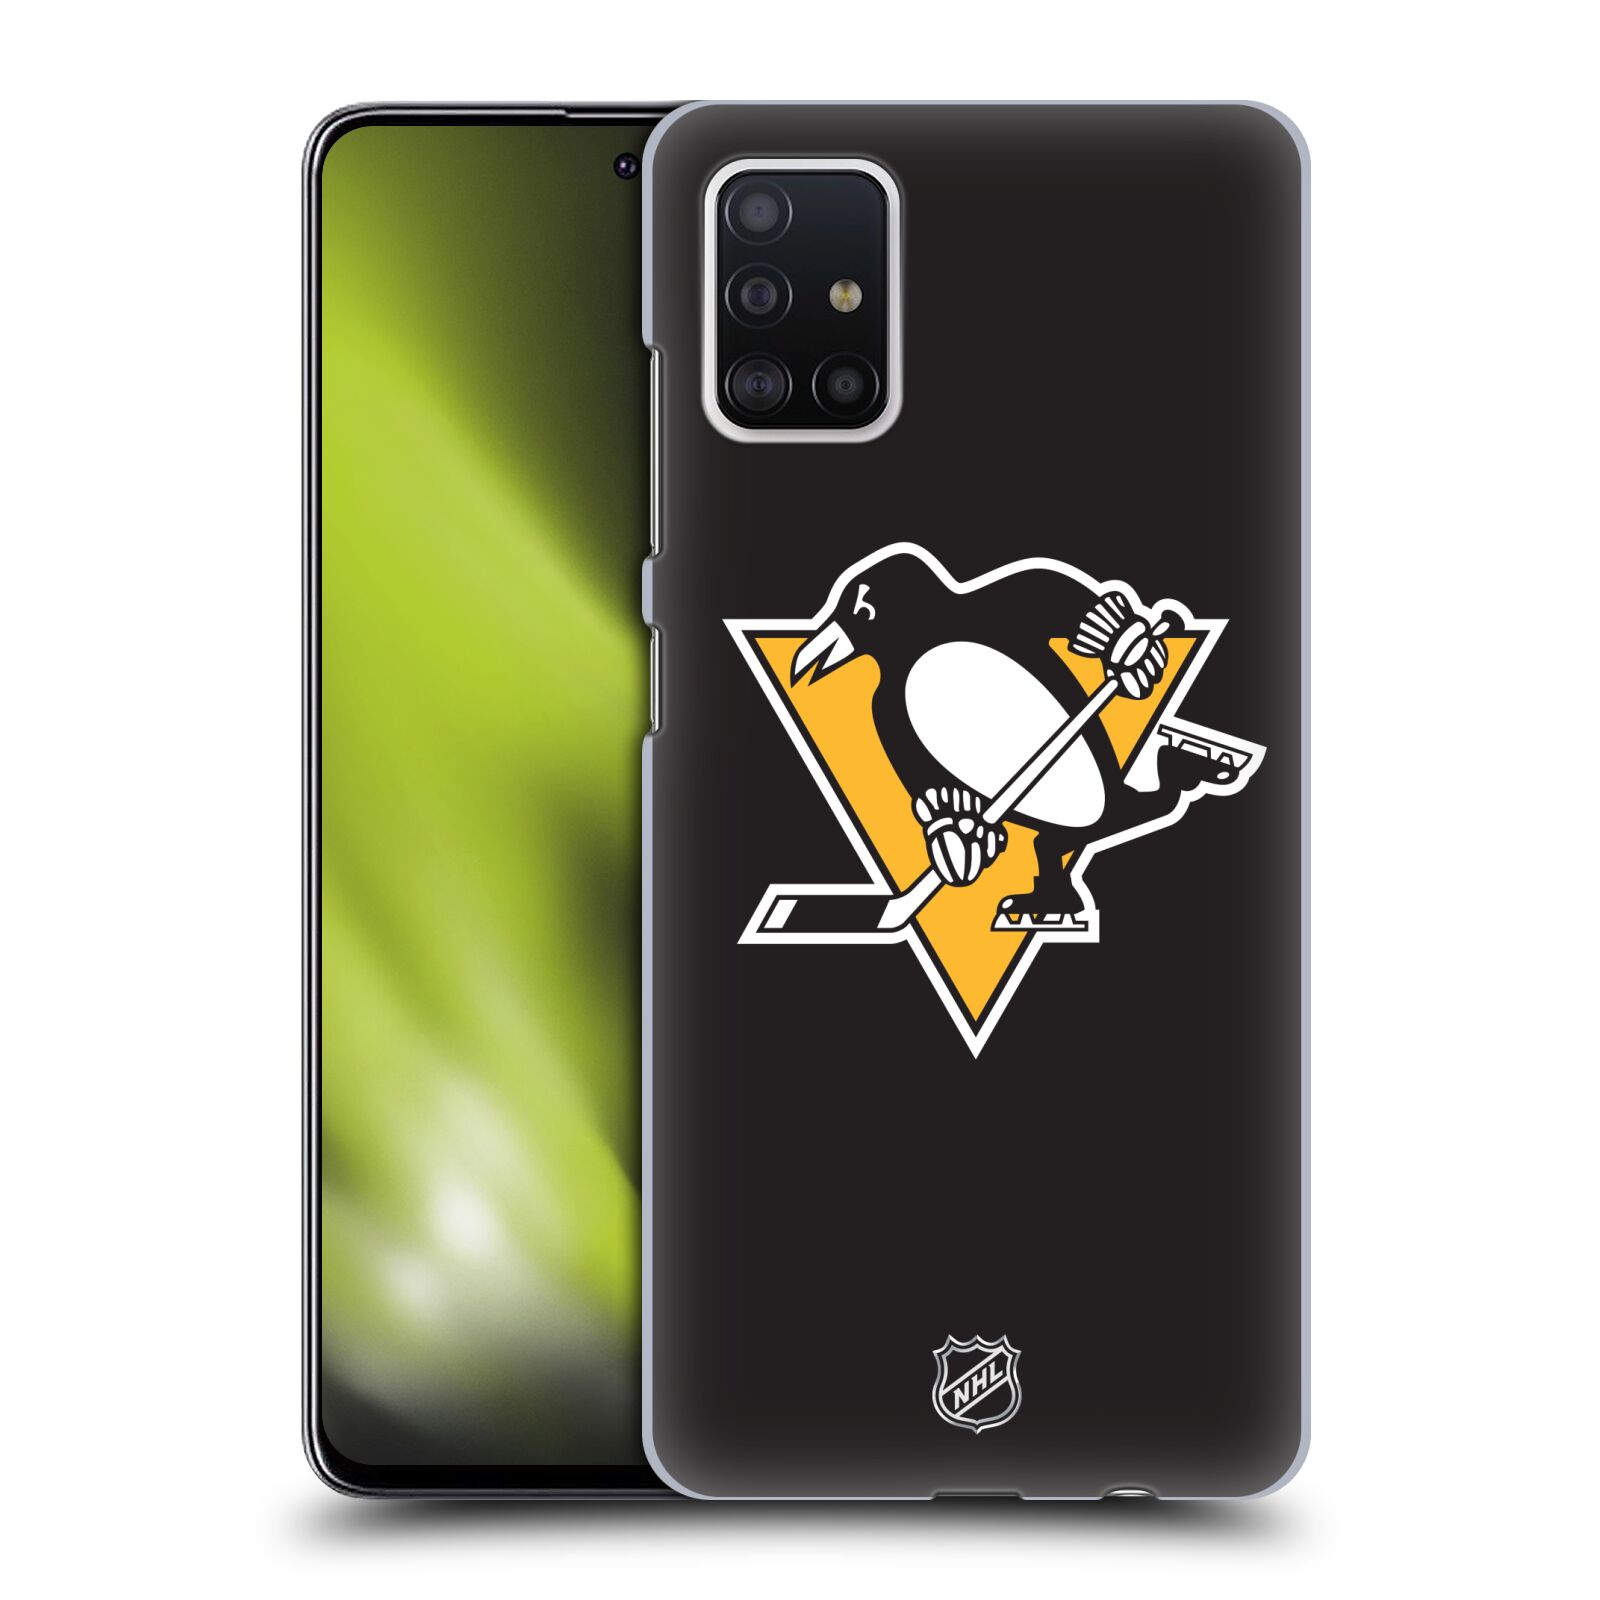 Pouzdro na mobil Samsung Galaxy A51 - HEAD CASE - Hokej NHL - Pittsburgh Penguins - černé pozadí znak